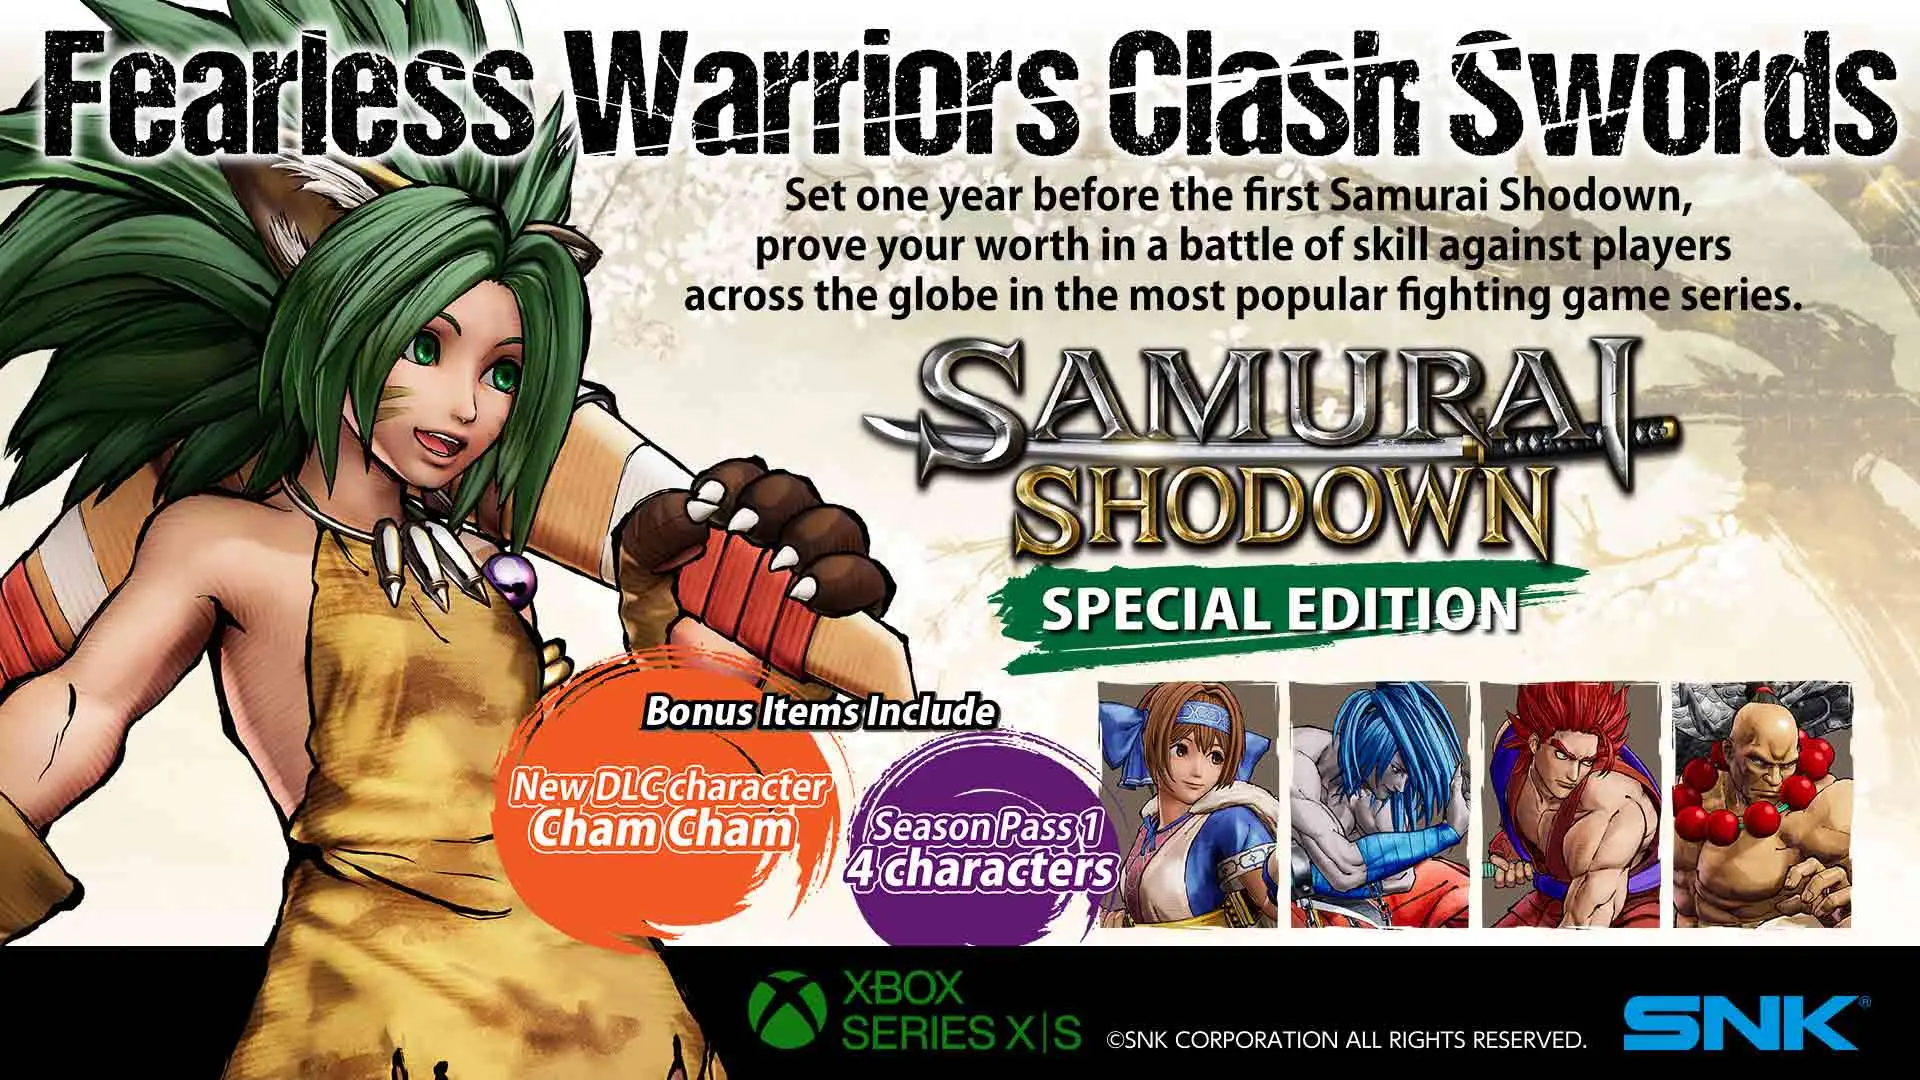 Samurai Shodown Special Edition launches on Xbox Series X